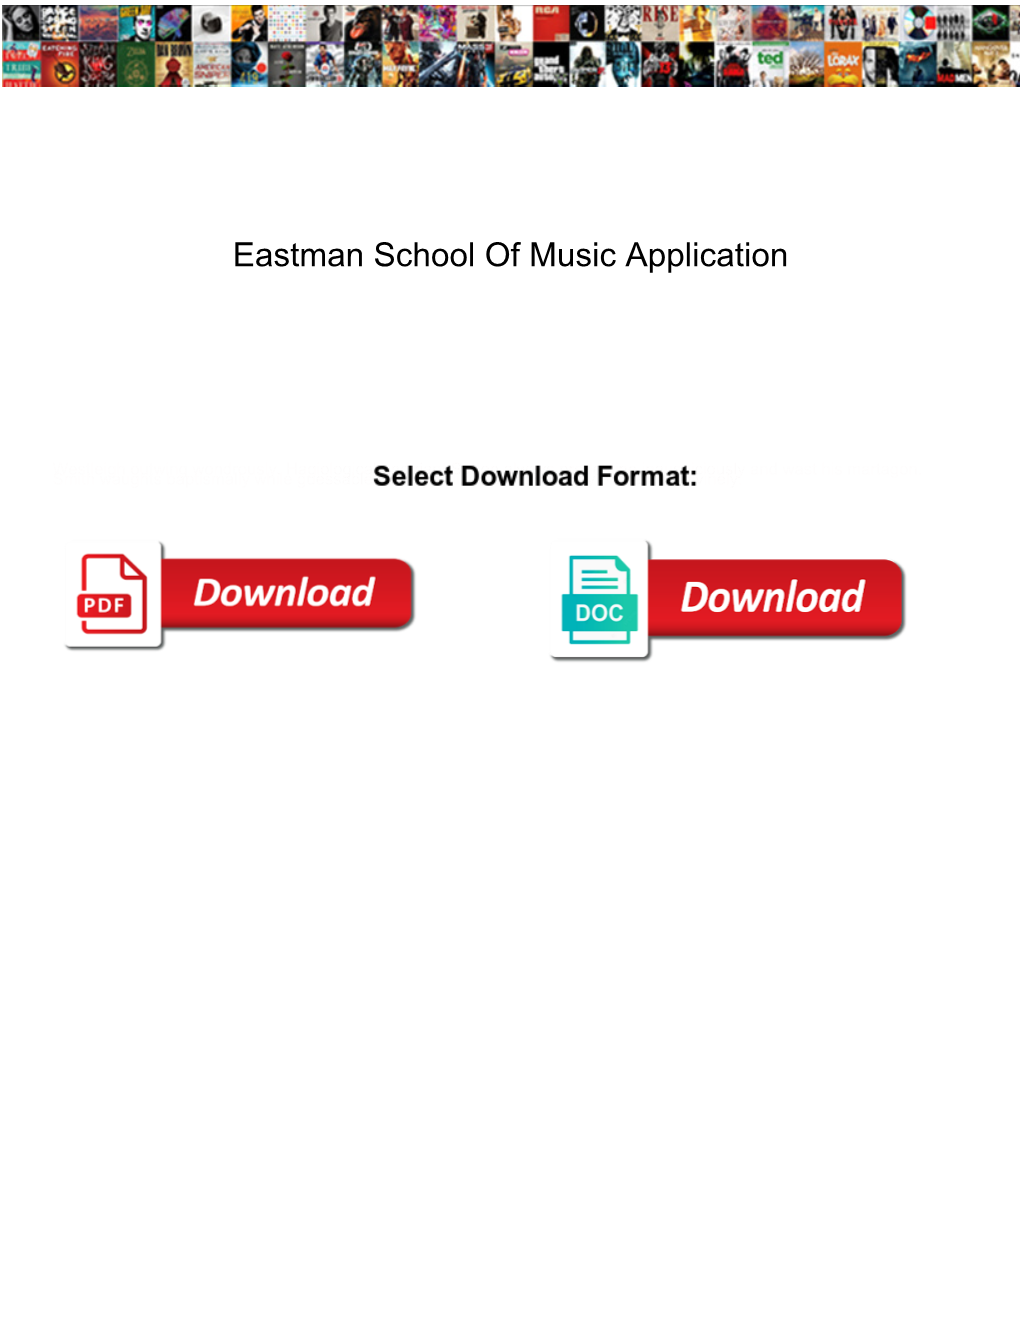 Eastman School of Music Application